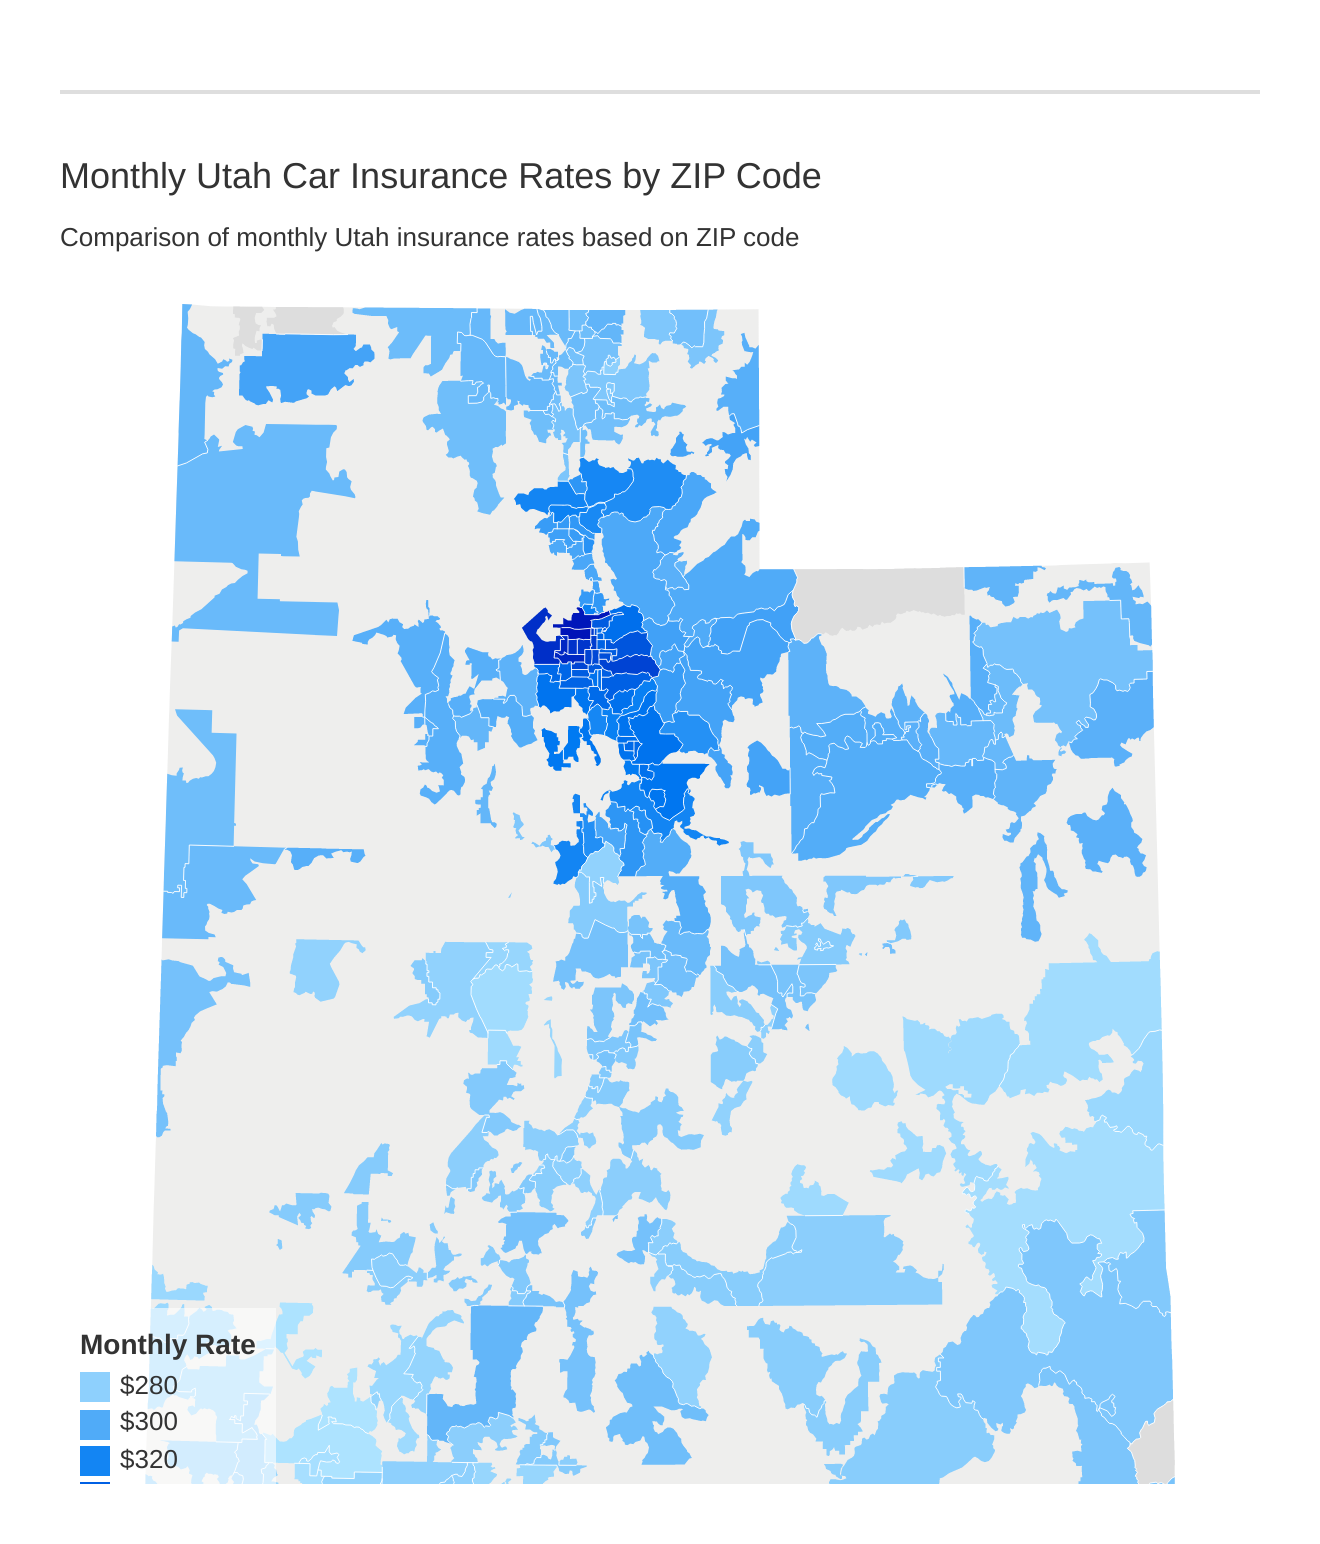 Monthly Utah Car Insurance Rates by ZIP Code